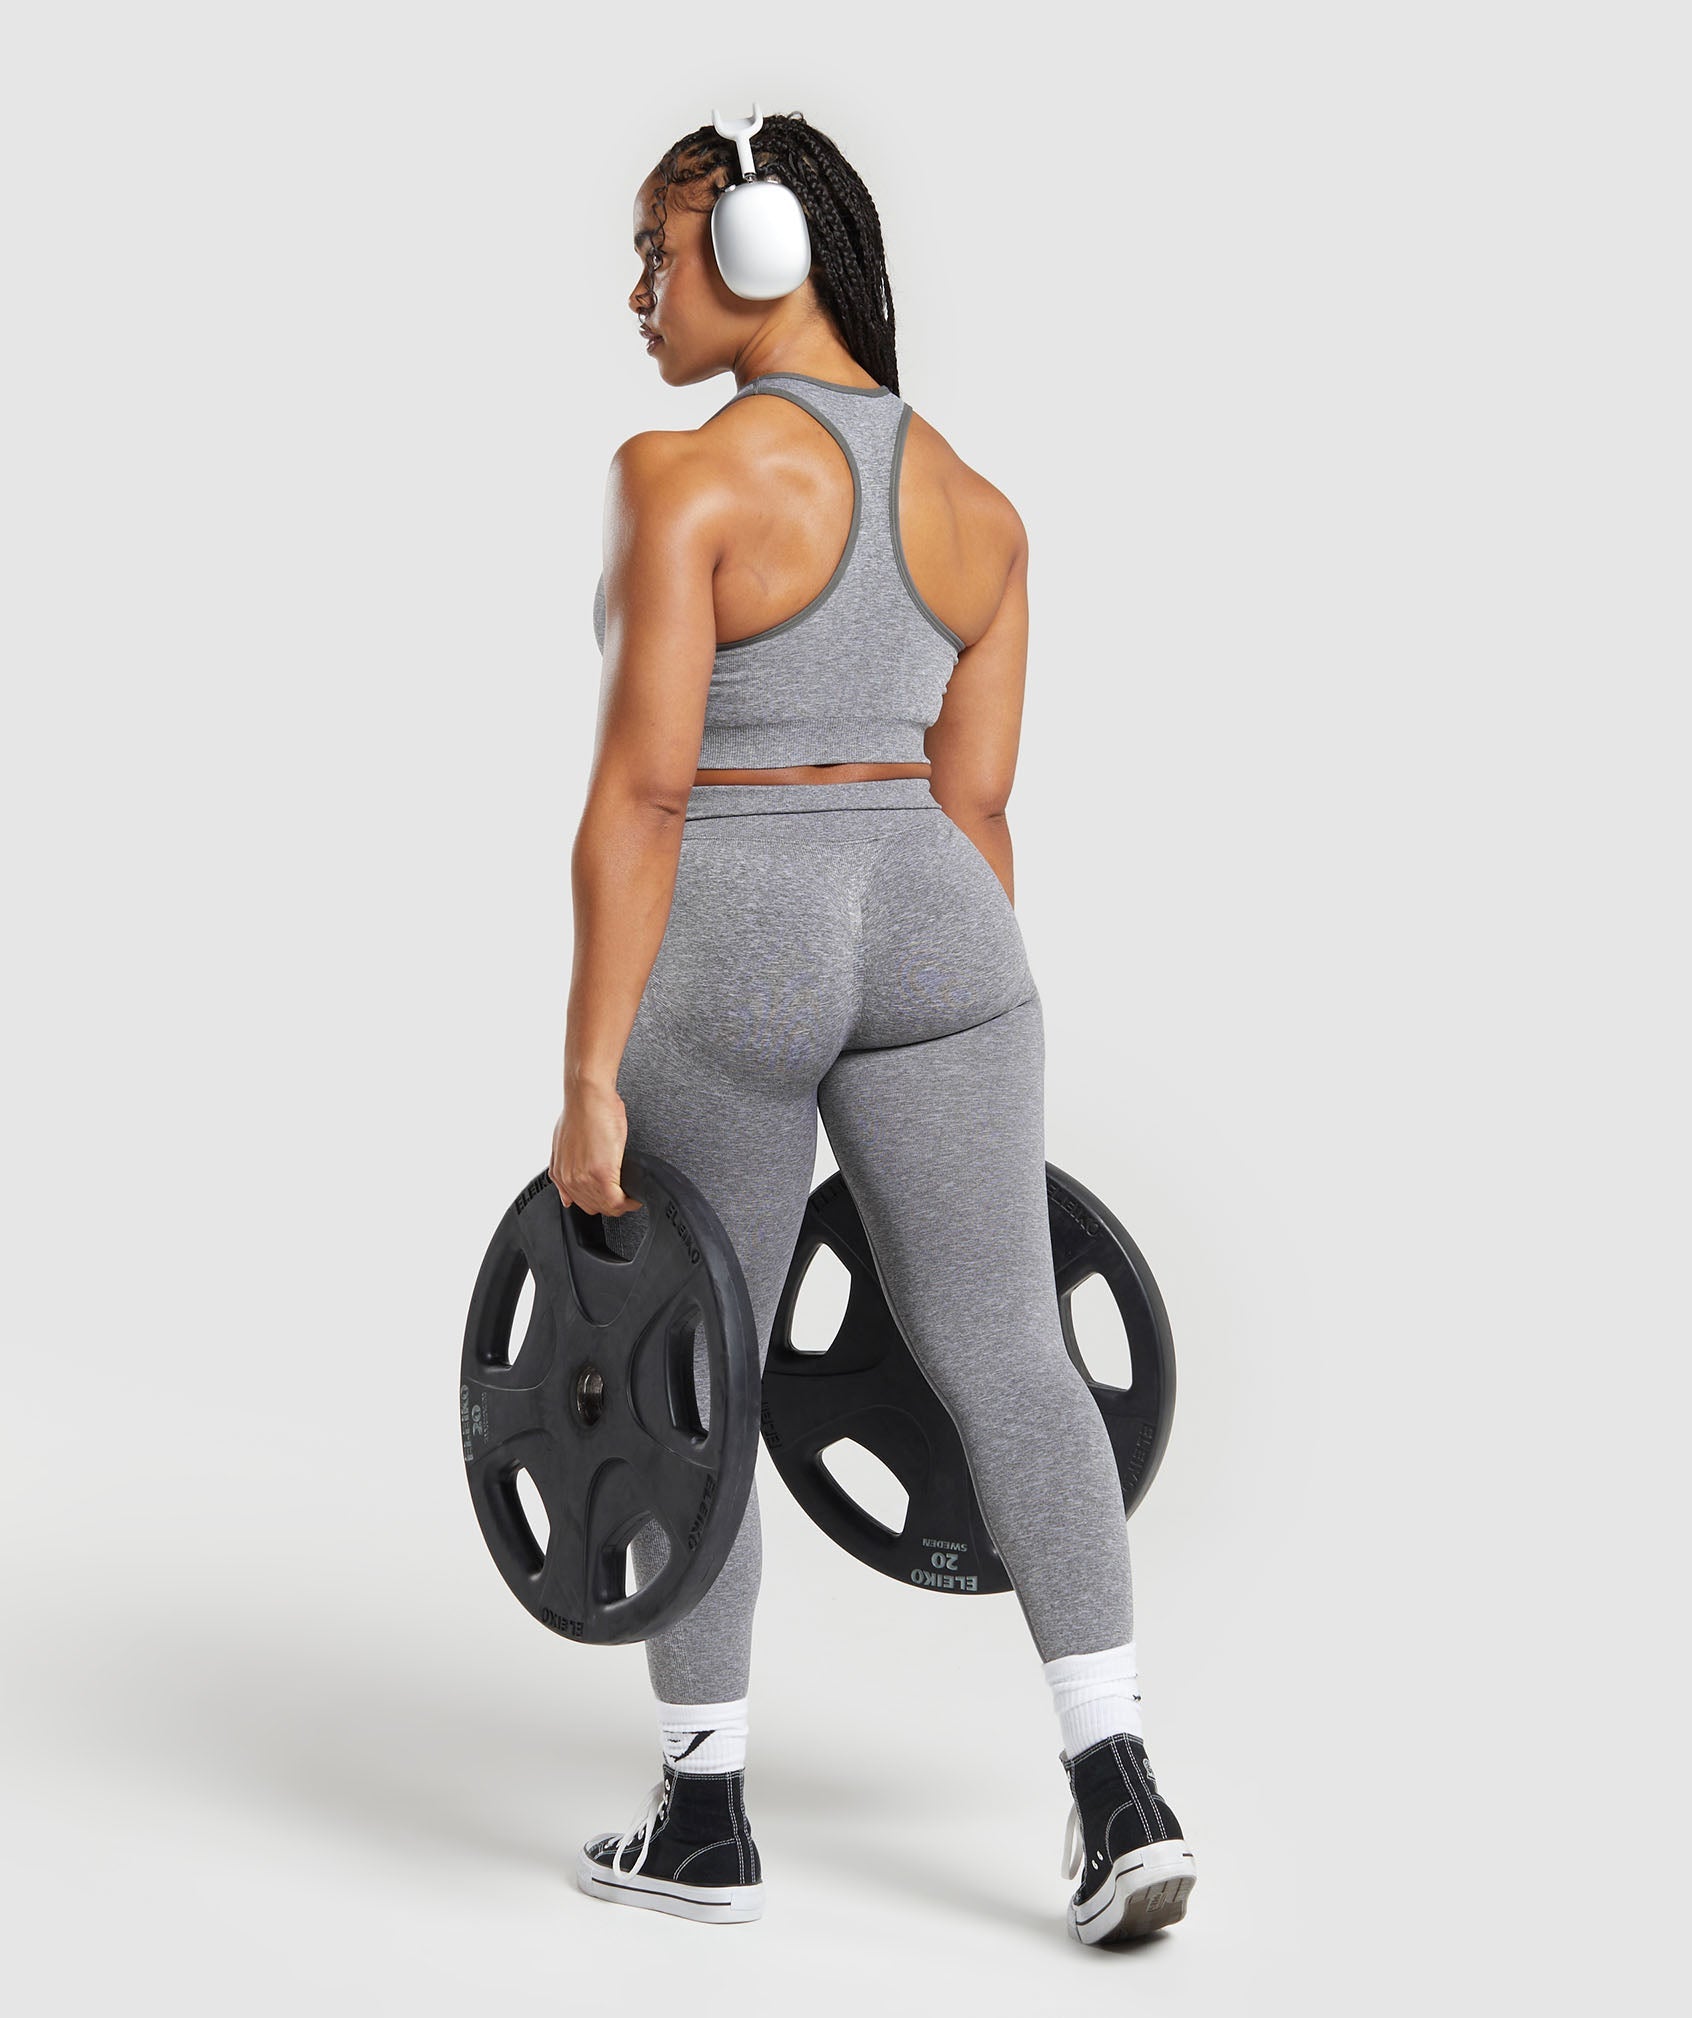 Urban Threads seamless squat proof gym leggings in charcoal grey marl